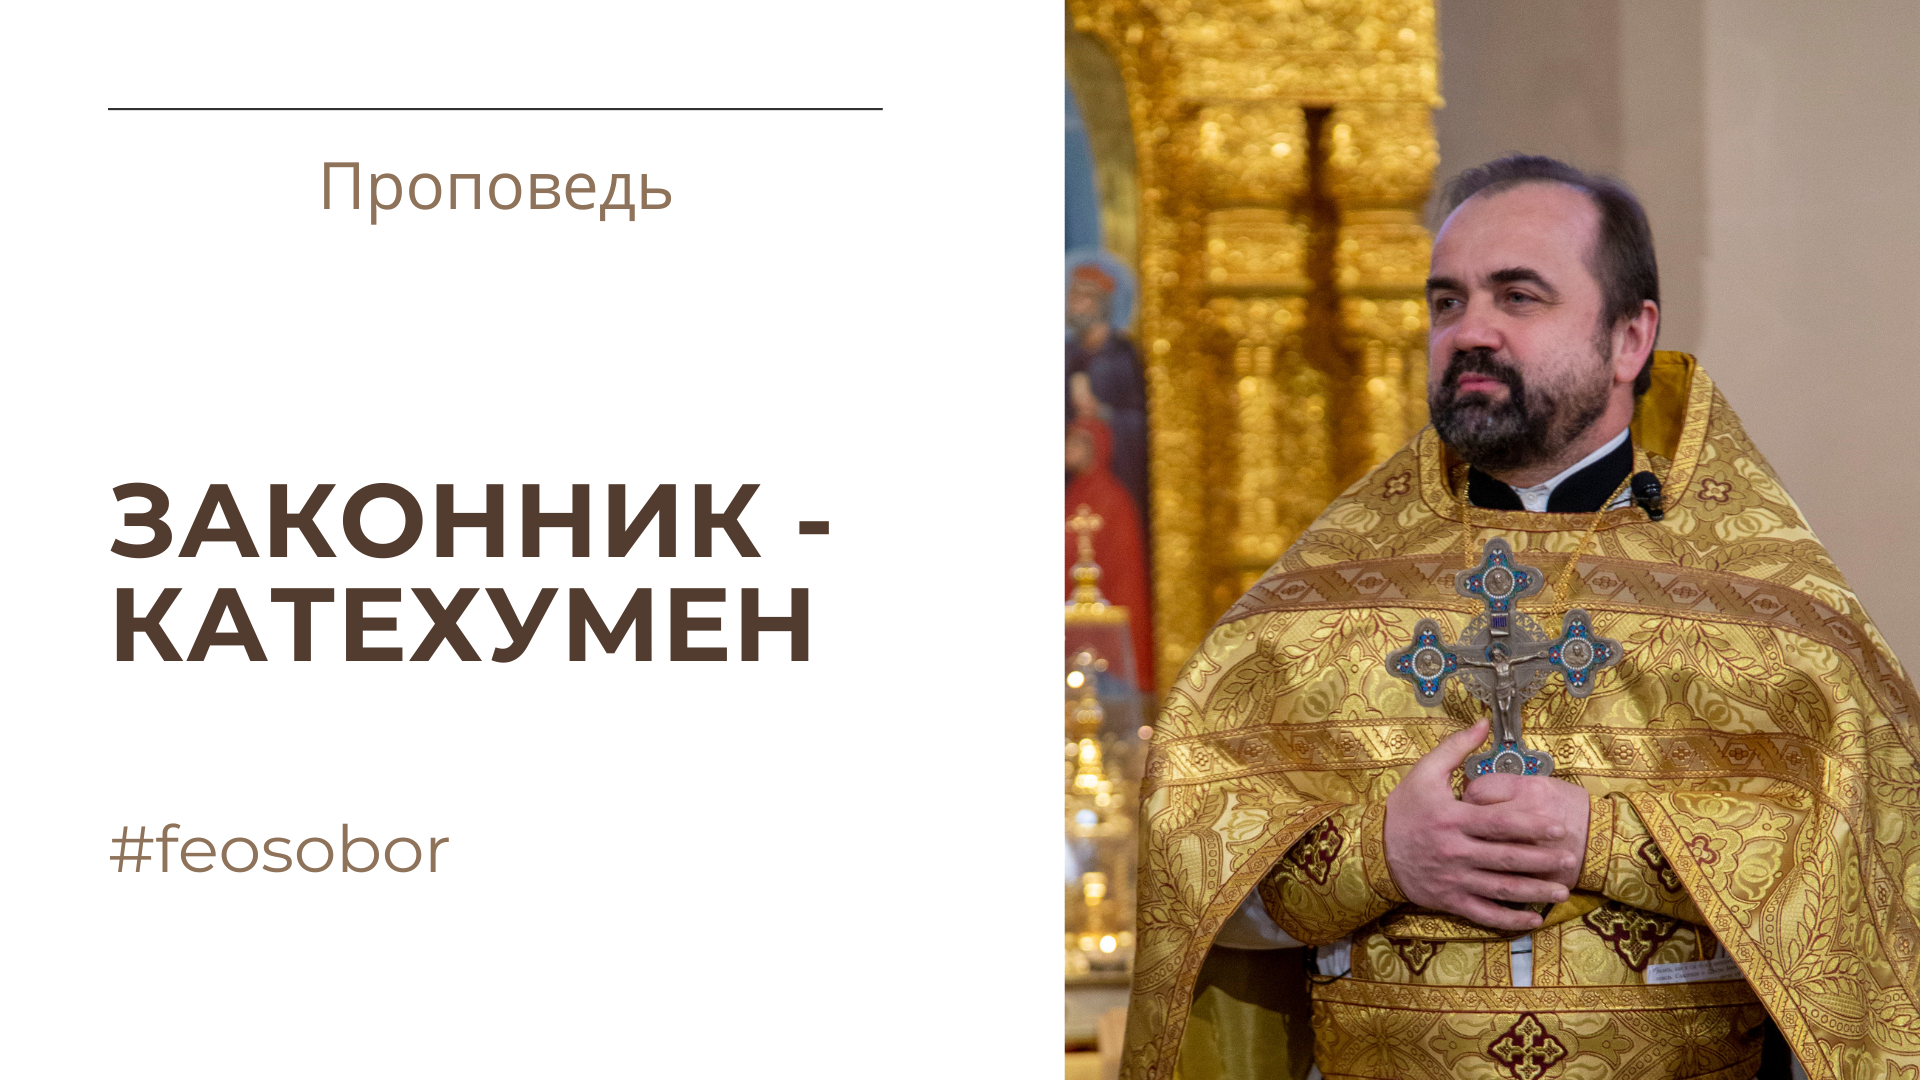 Проповедь протоиерея Александра Сорокина и видео Литургии с комментариями